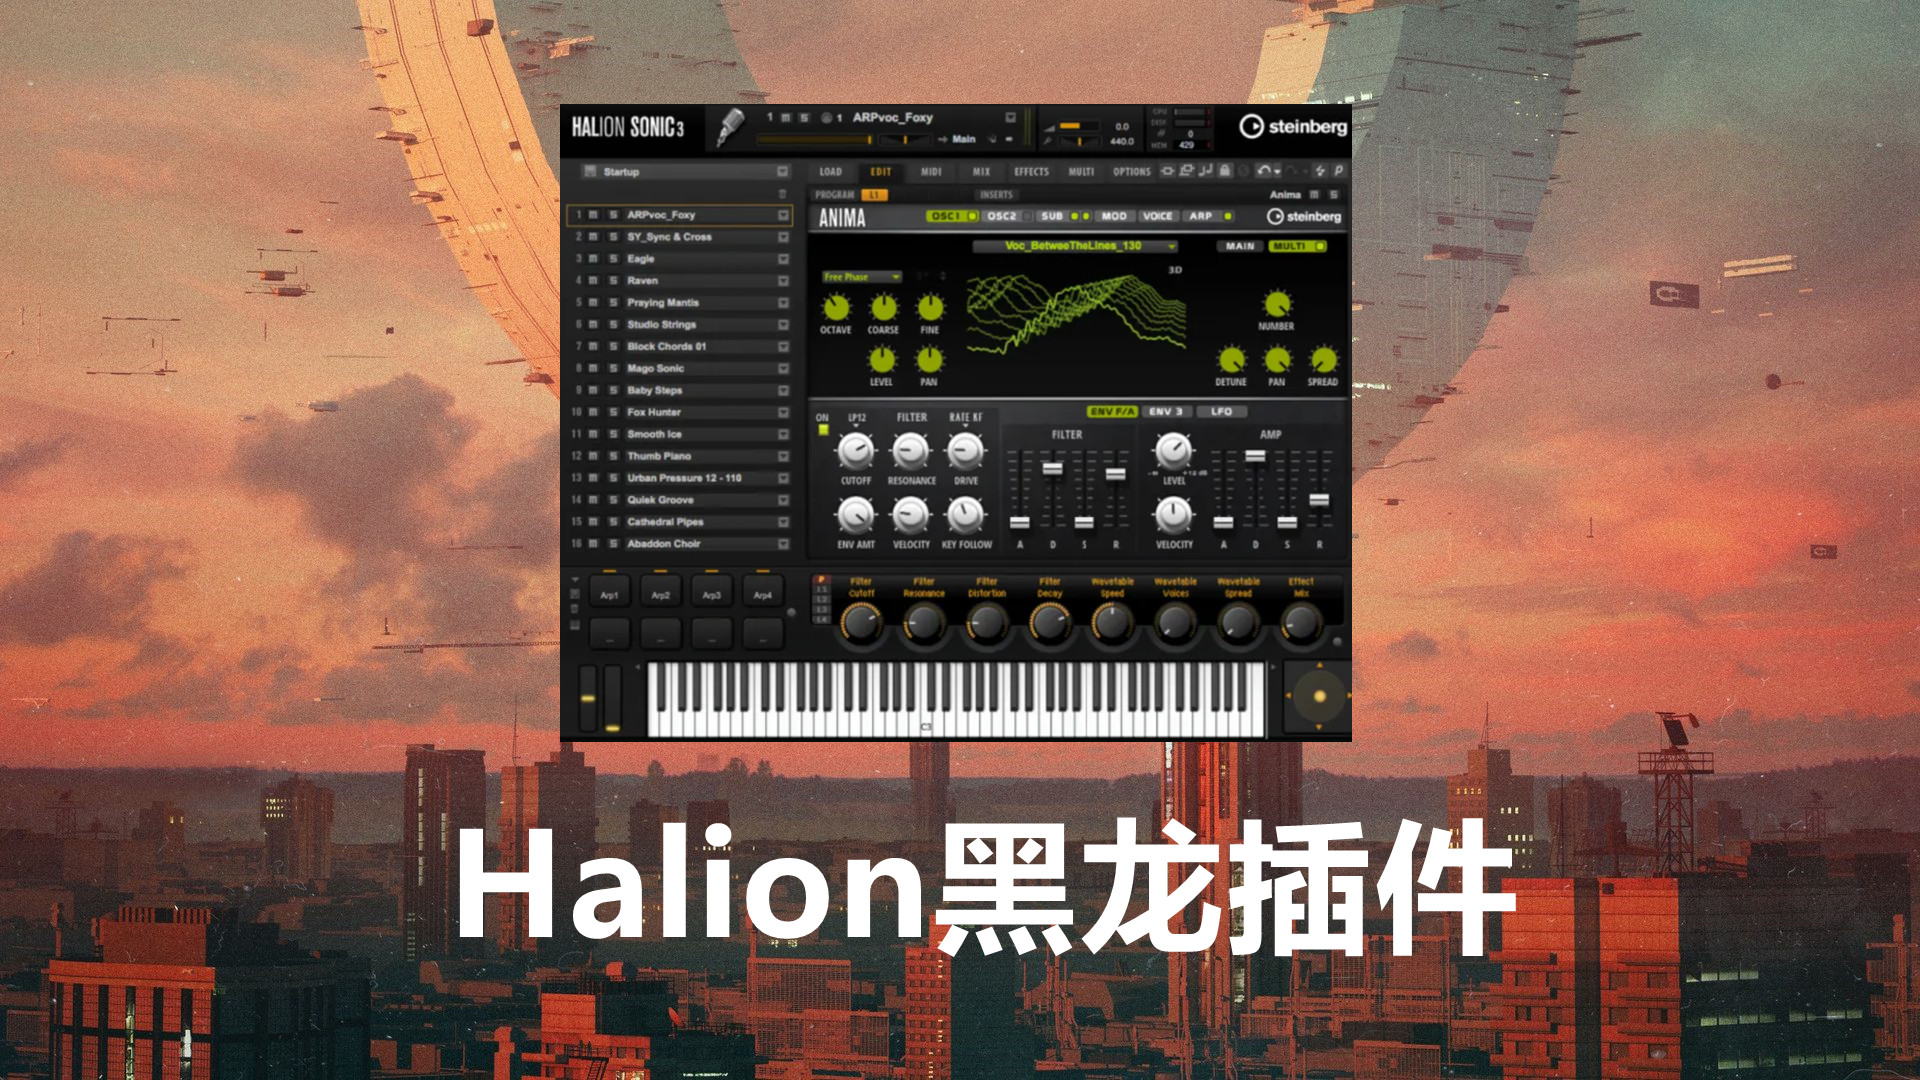 Halion Sonic 黑龙插件 Steinberg Halion Plugins【Windows版\MacOS版】+完整版音色库29G扩展音源